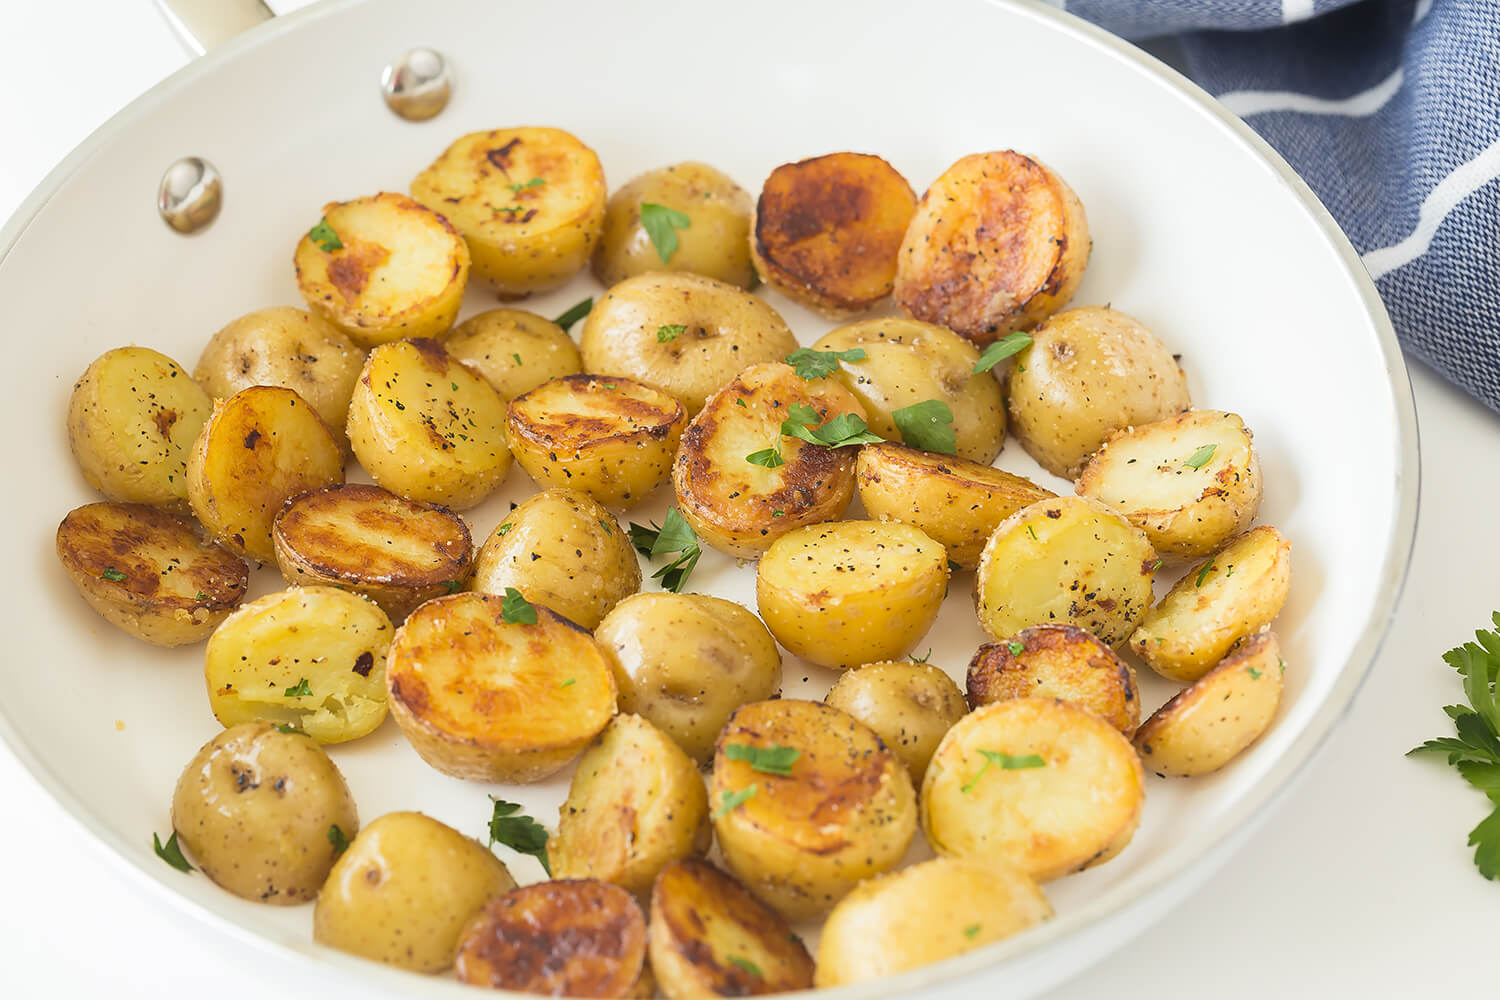 Pan Fried Baby Potatoes - The Farmwife Feeds